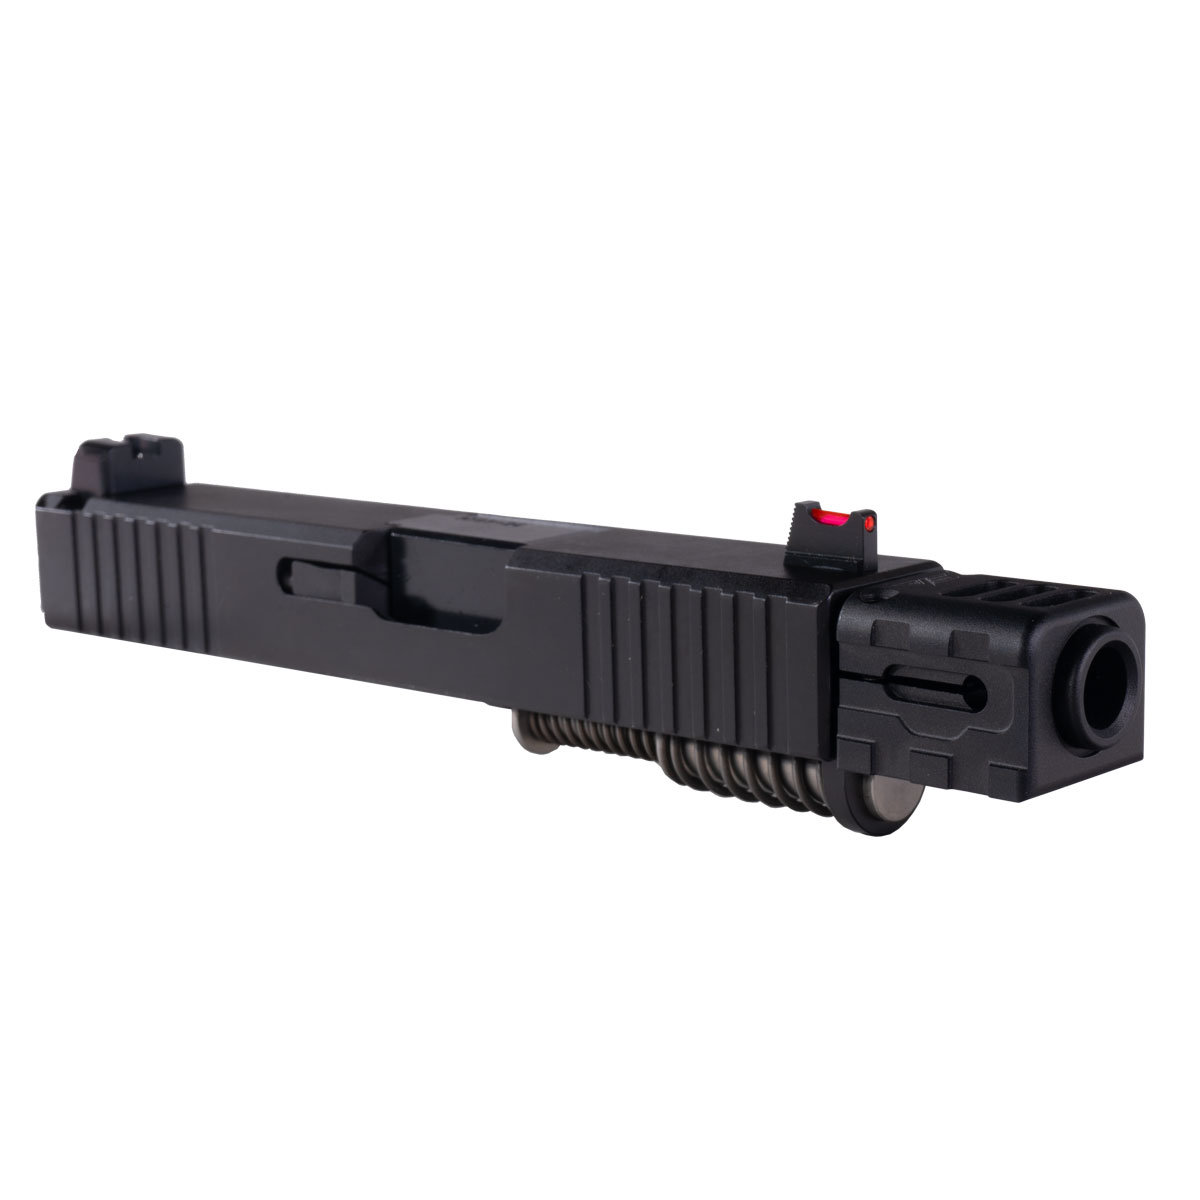 MMC 'Simum w/ Sylvan Arms Compensator' 9mm Complete Slide Kit - Glock 26 Gen 1-2 Compatible